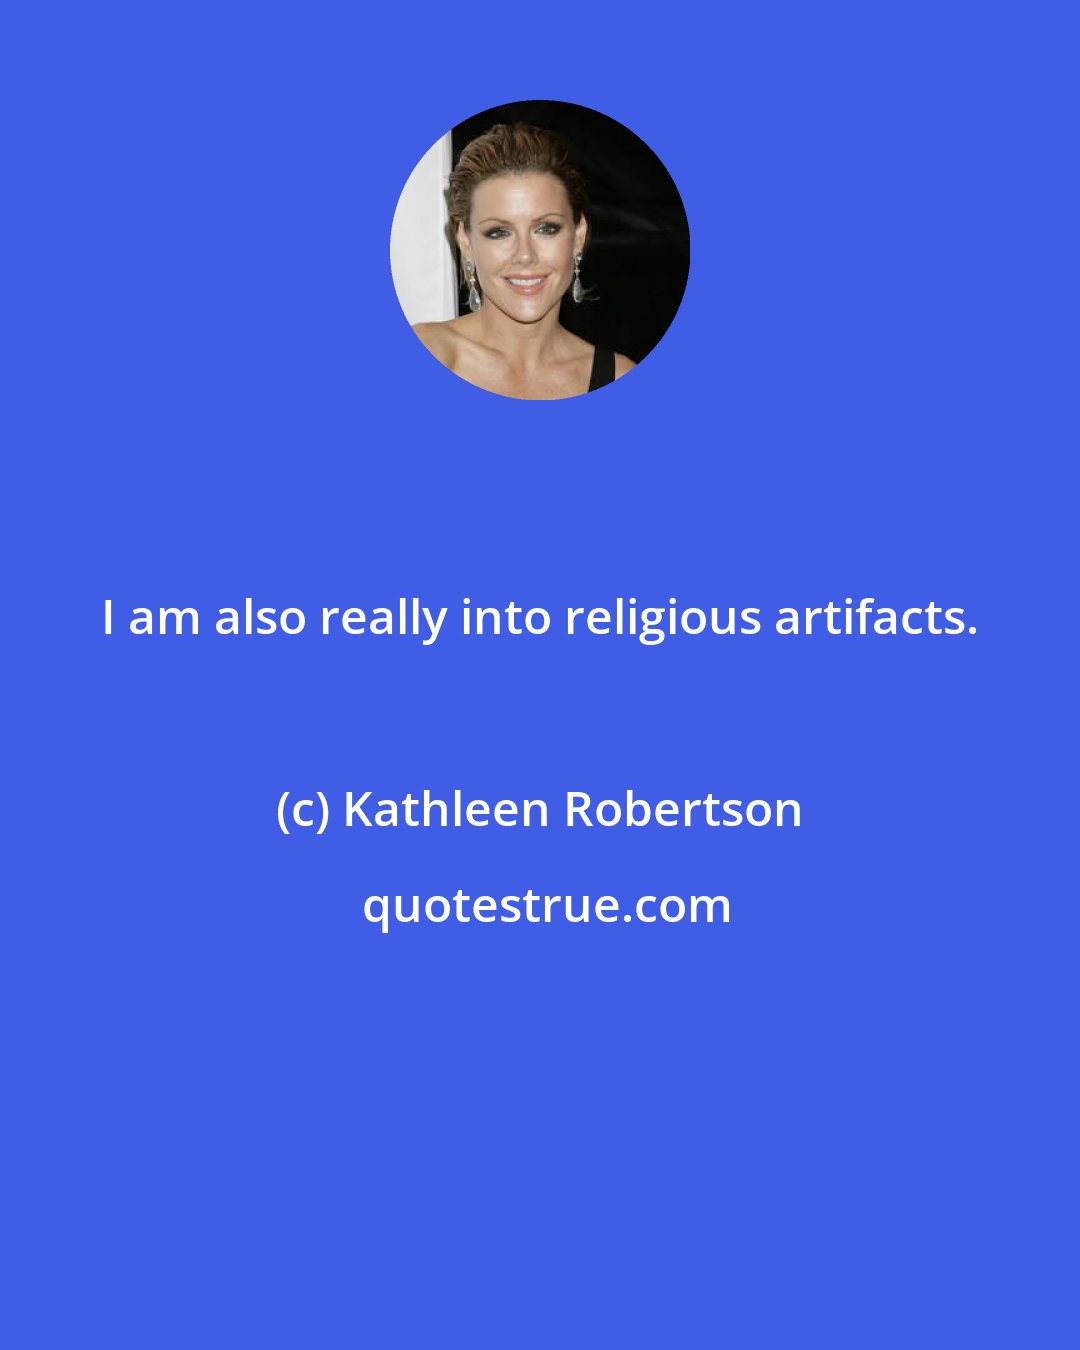 Kathleen Robertson: I am also really into religious artifacts.